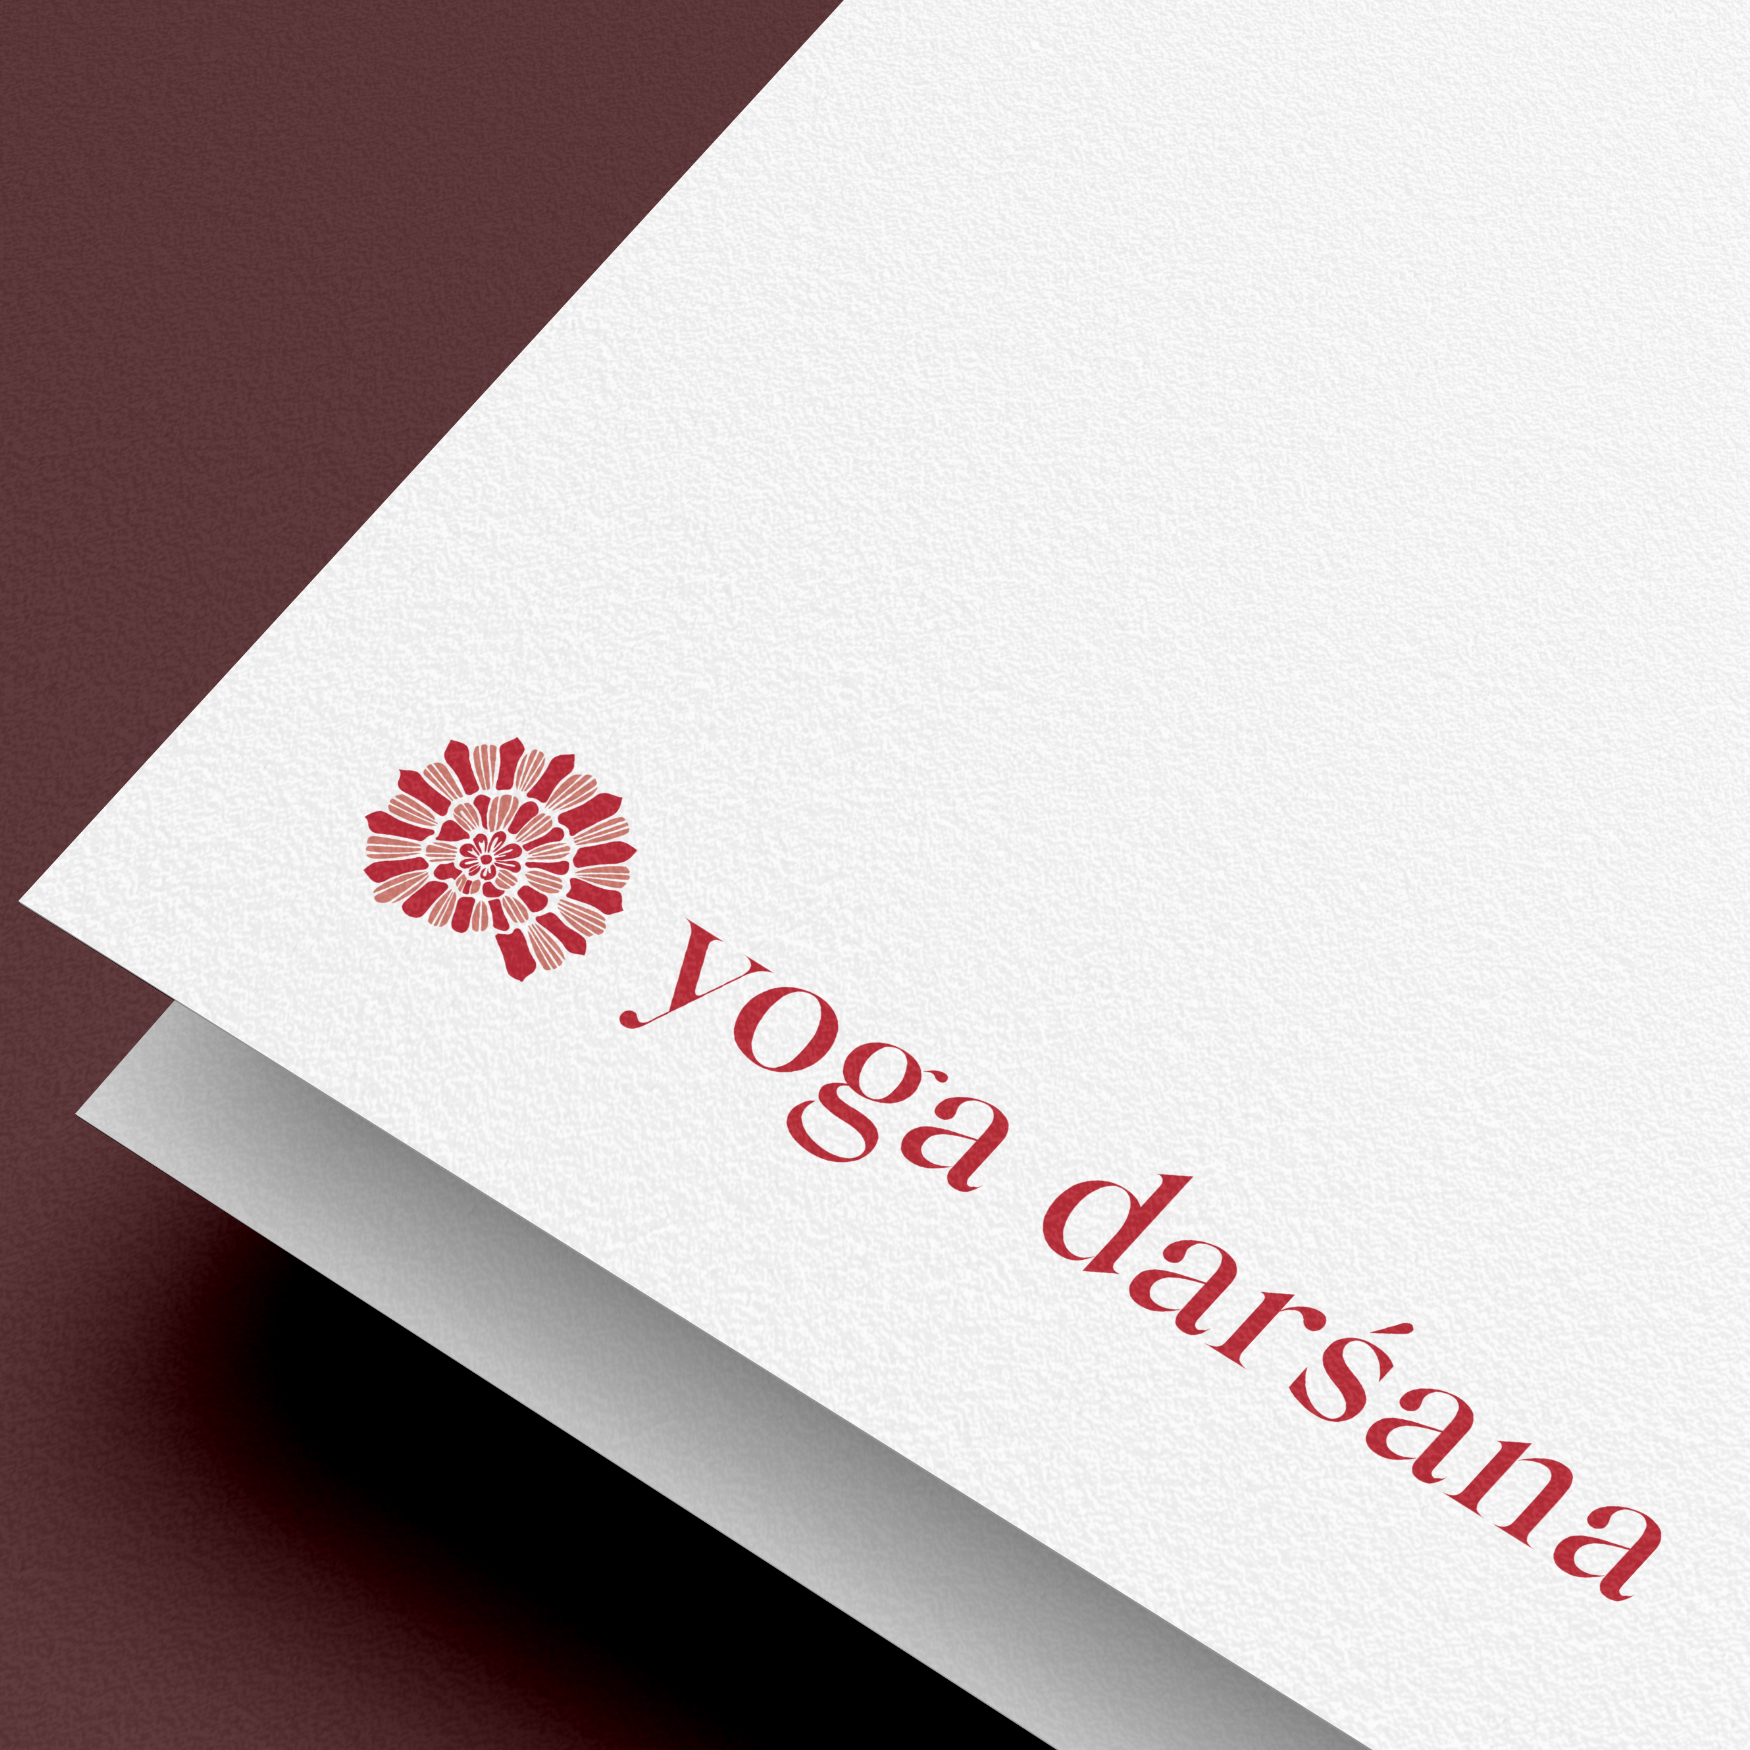 Logo Design for Yoga Darsana Galway